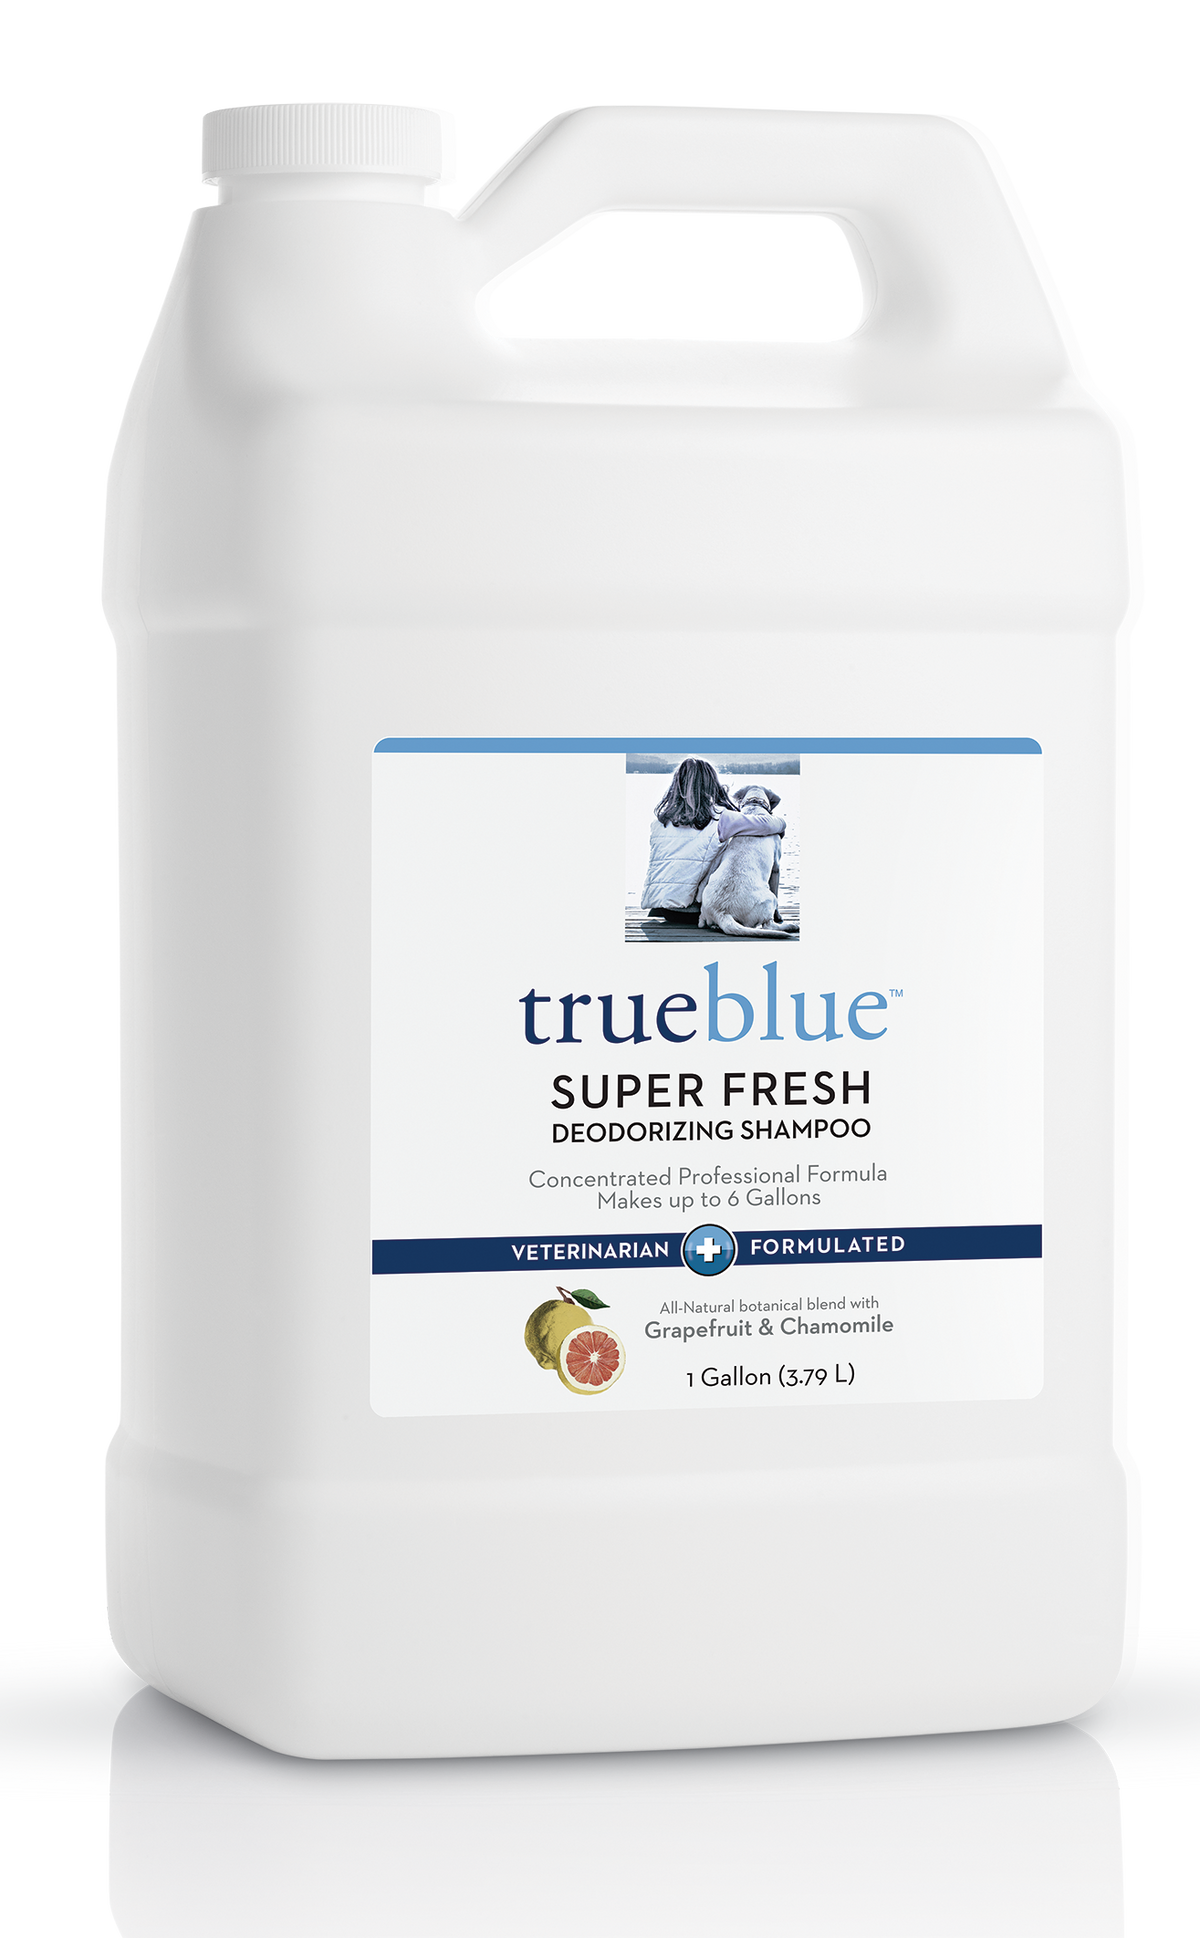 Super Fresh Dog Shampoo - Concentrated Professional Formula